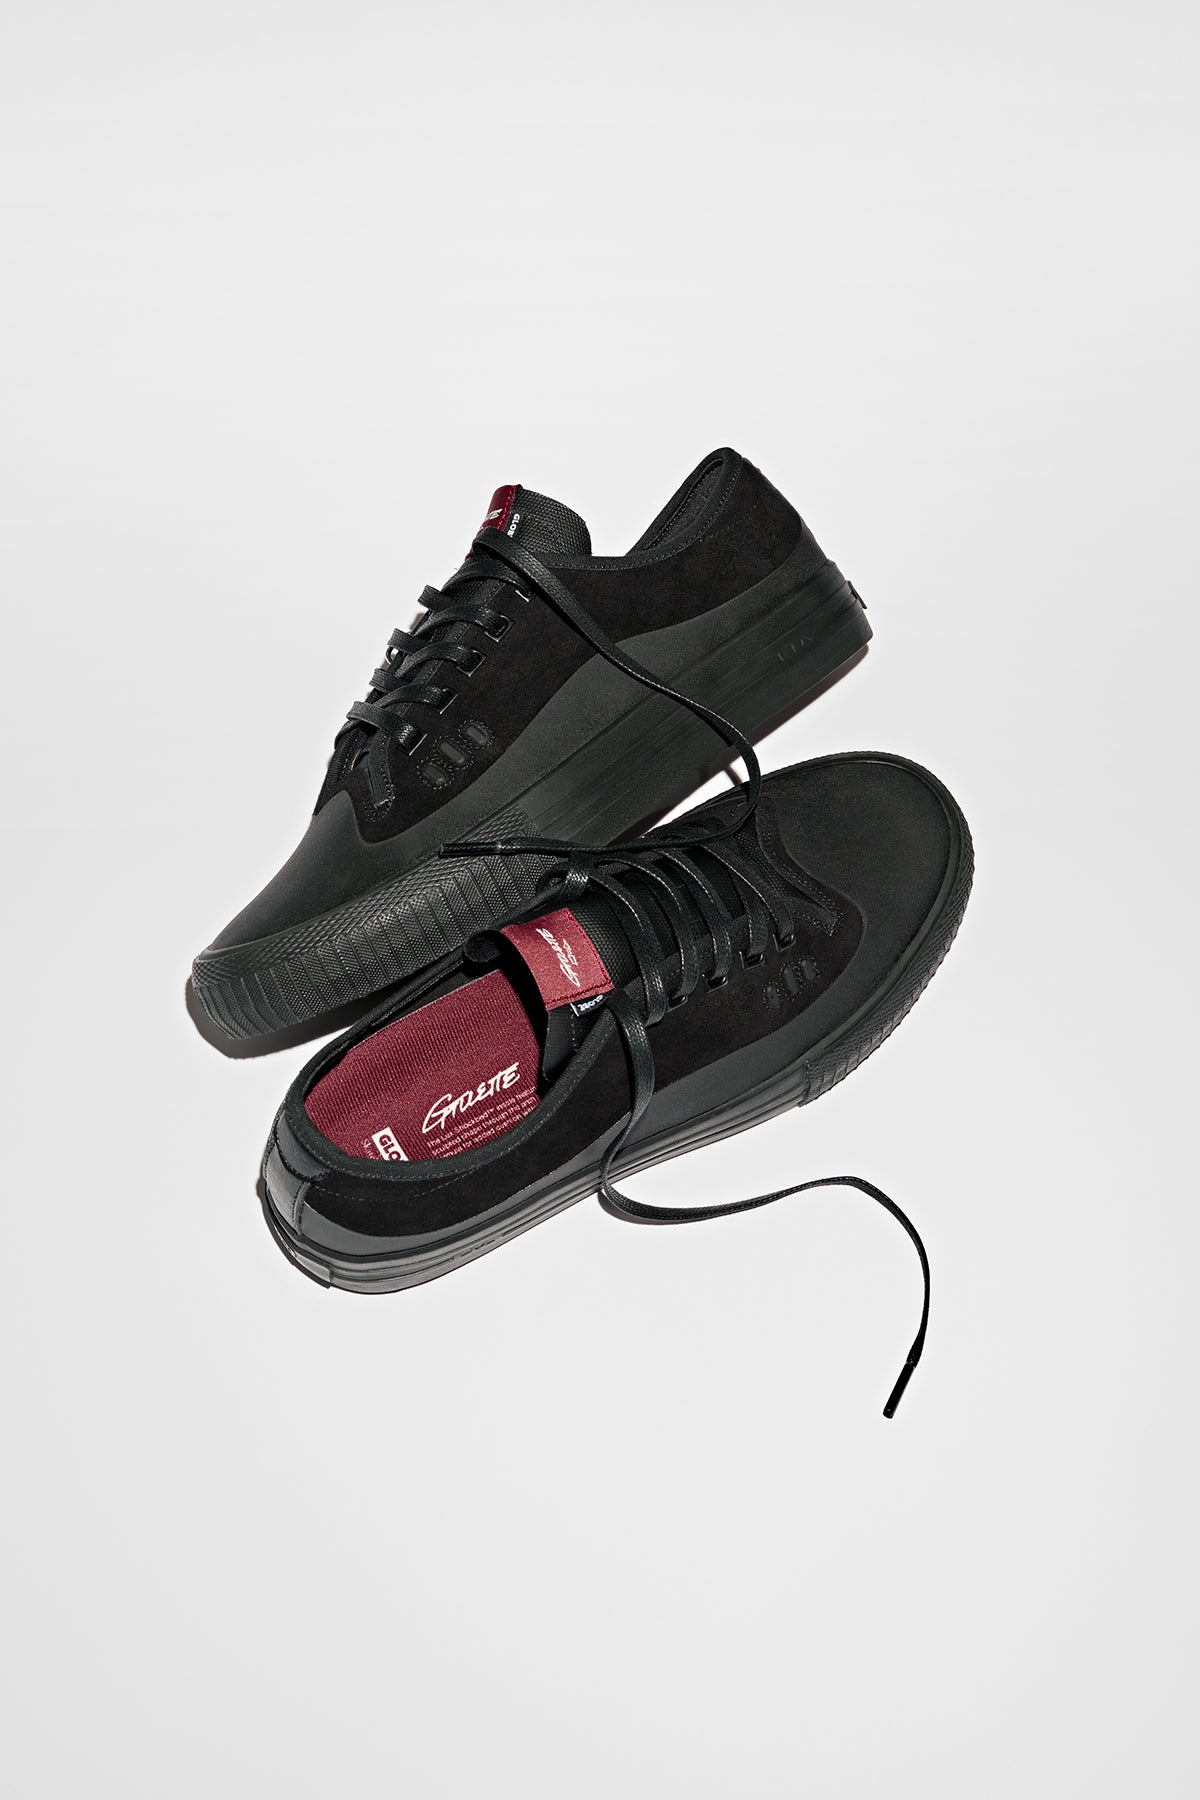 Globe - Gillette - Black/Black Suede - skateboard Chaussures